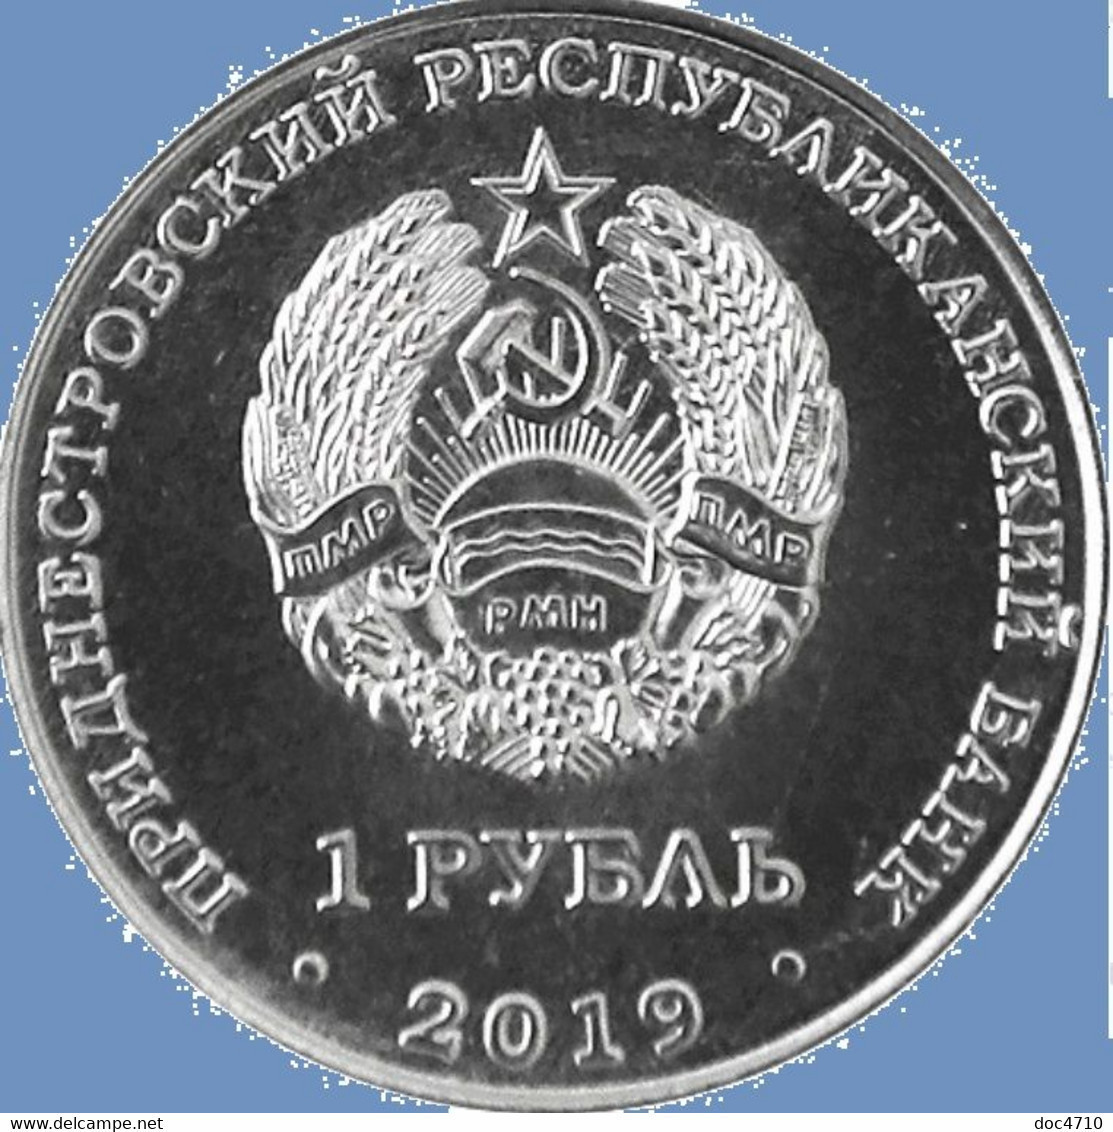 Moldova-Transnistria 1 Ruble 2019, Chinese Zodiac Series - Year Of The Metal Rat 2020, KM#New, Unc - Moldavie